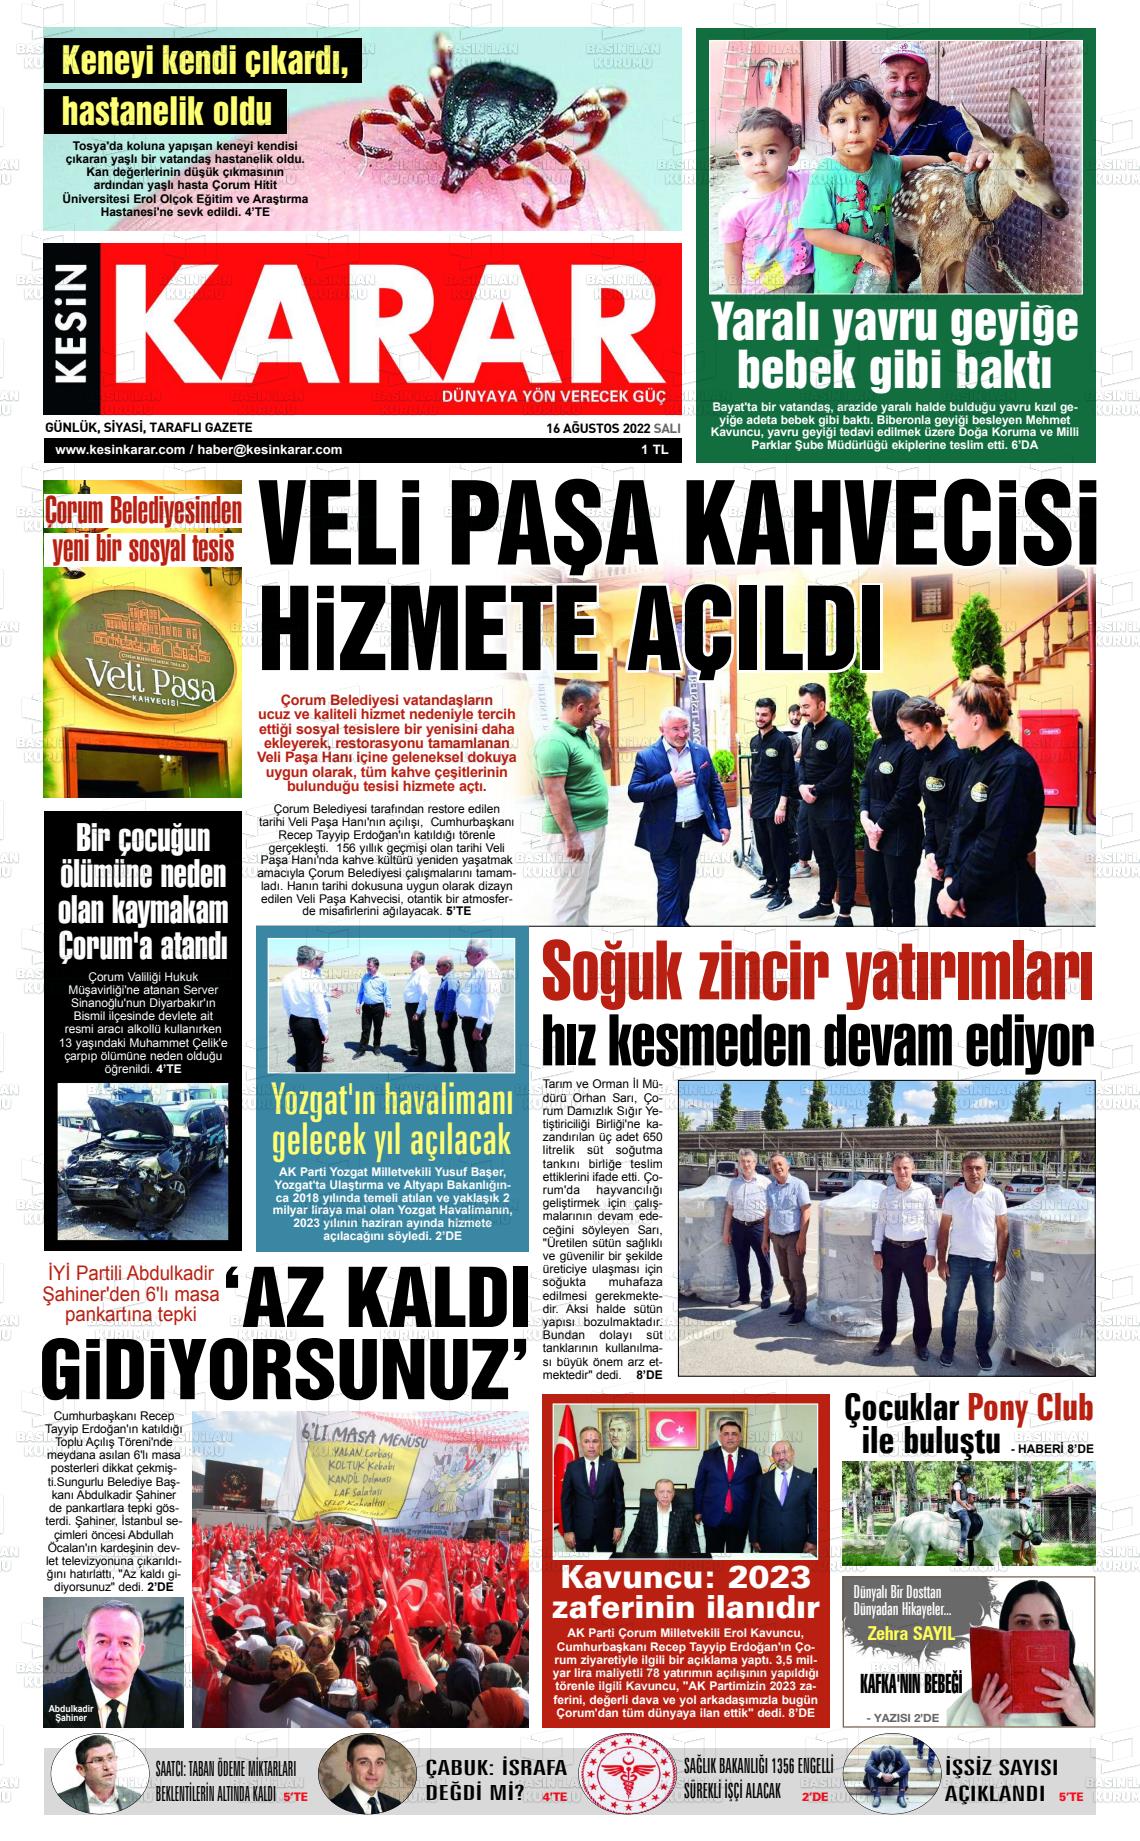 16 Ağustos 2022 Kesin Karar Gazete Manşeti